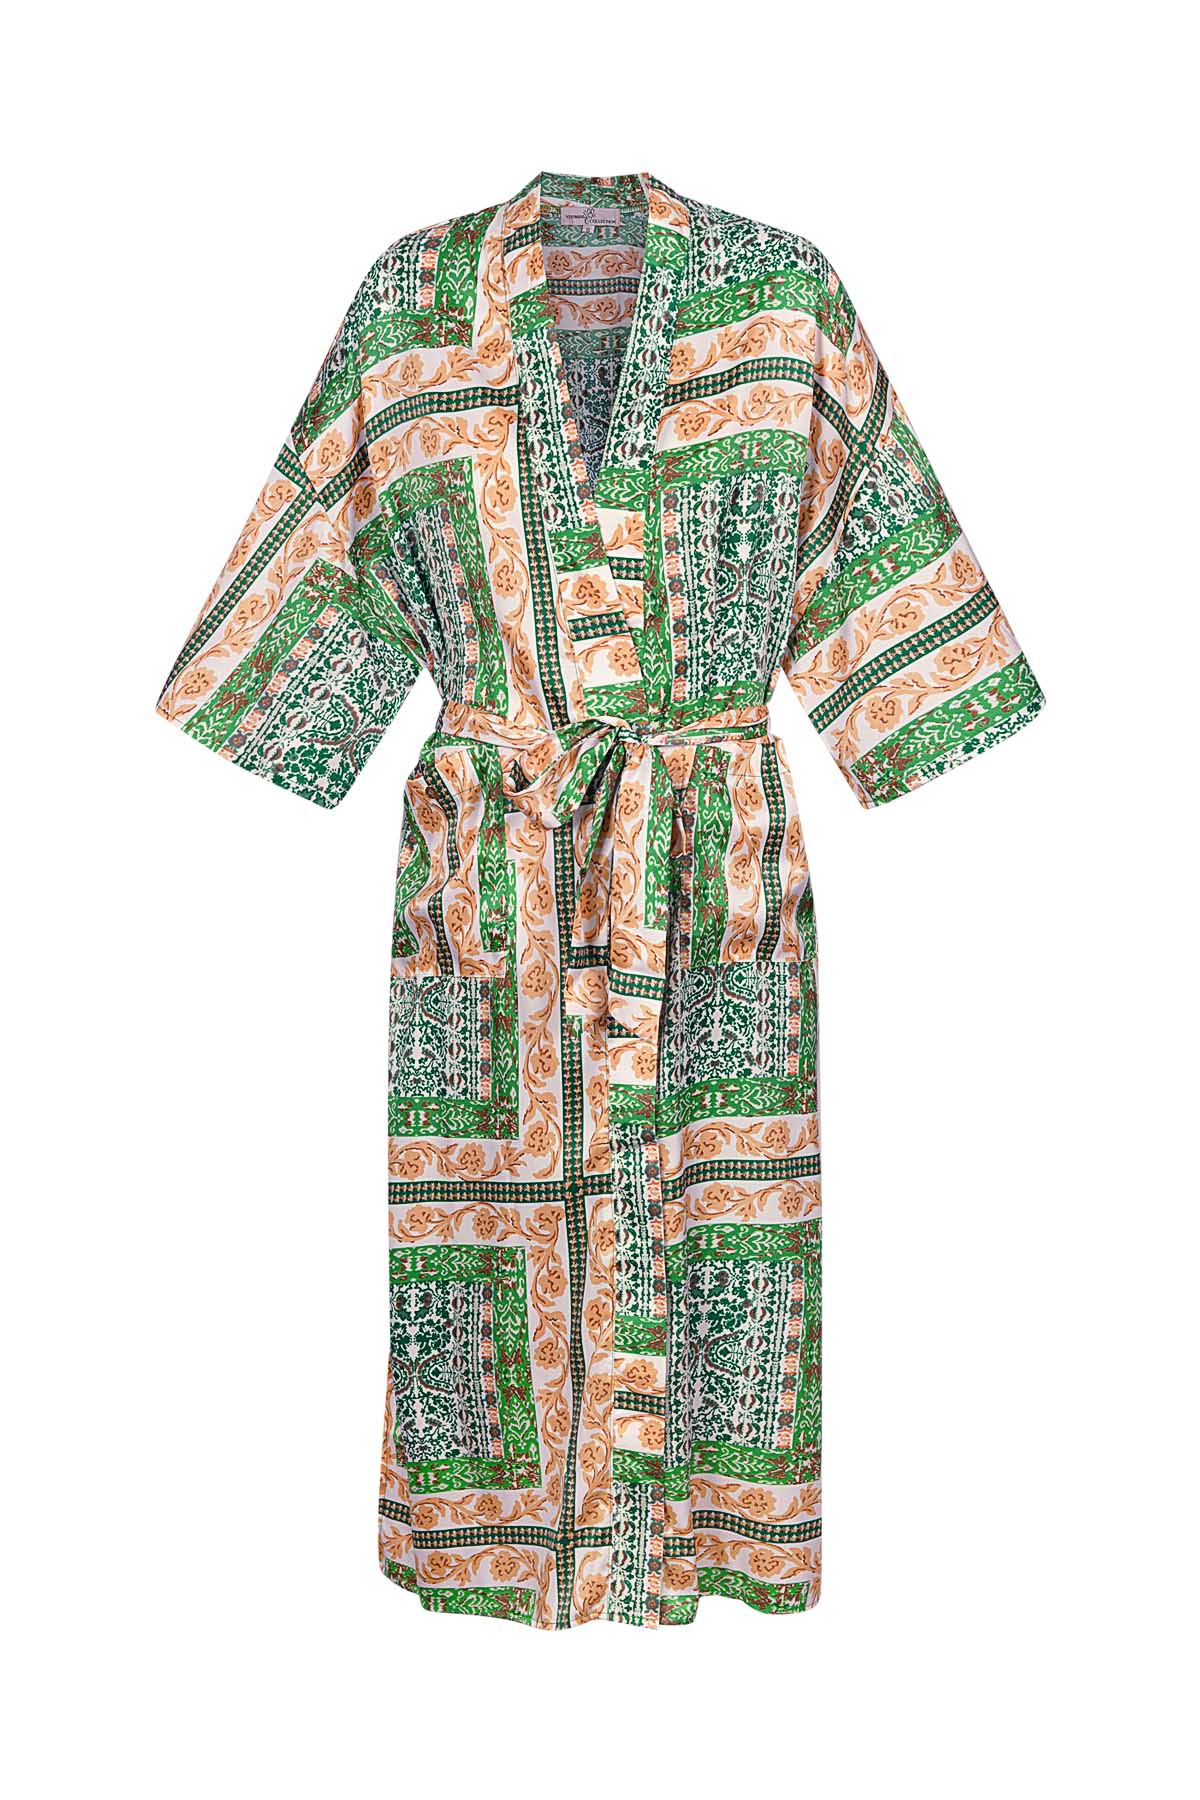 Kimono busy print - green